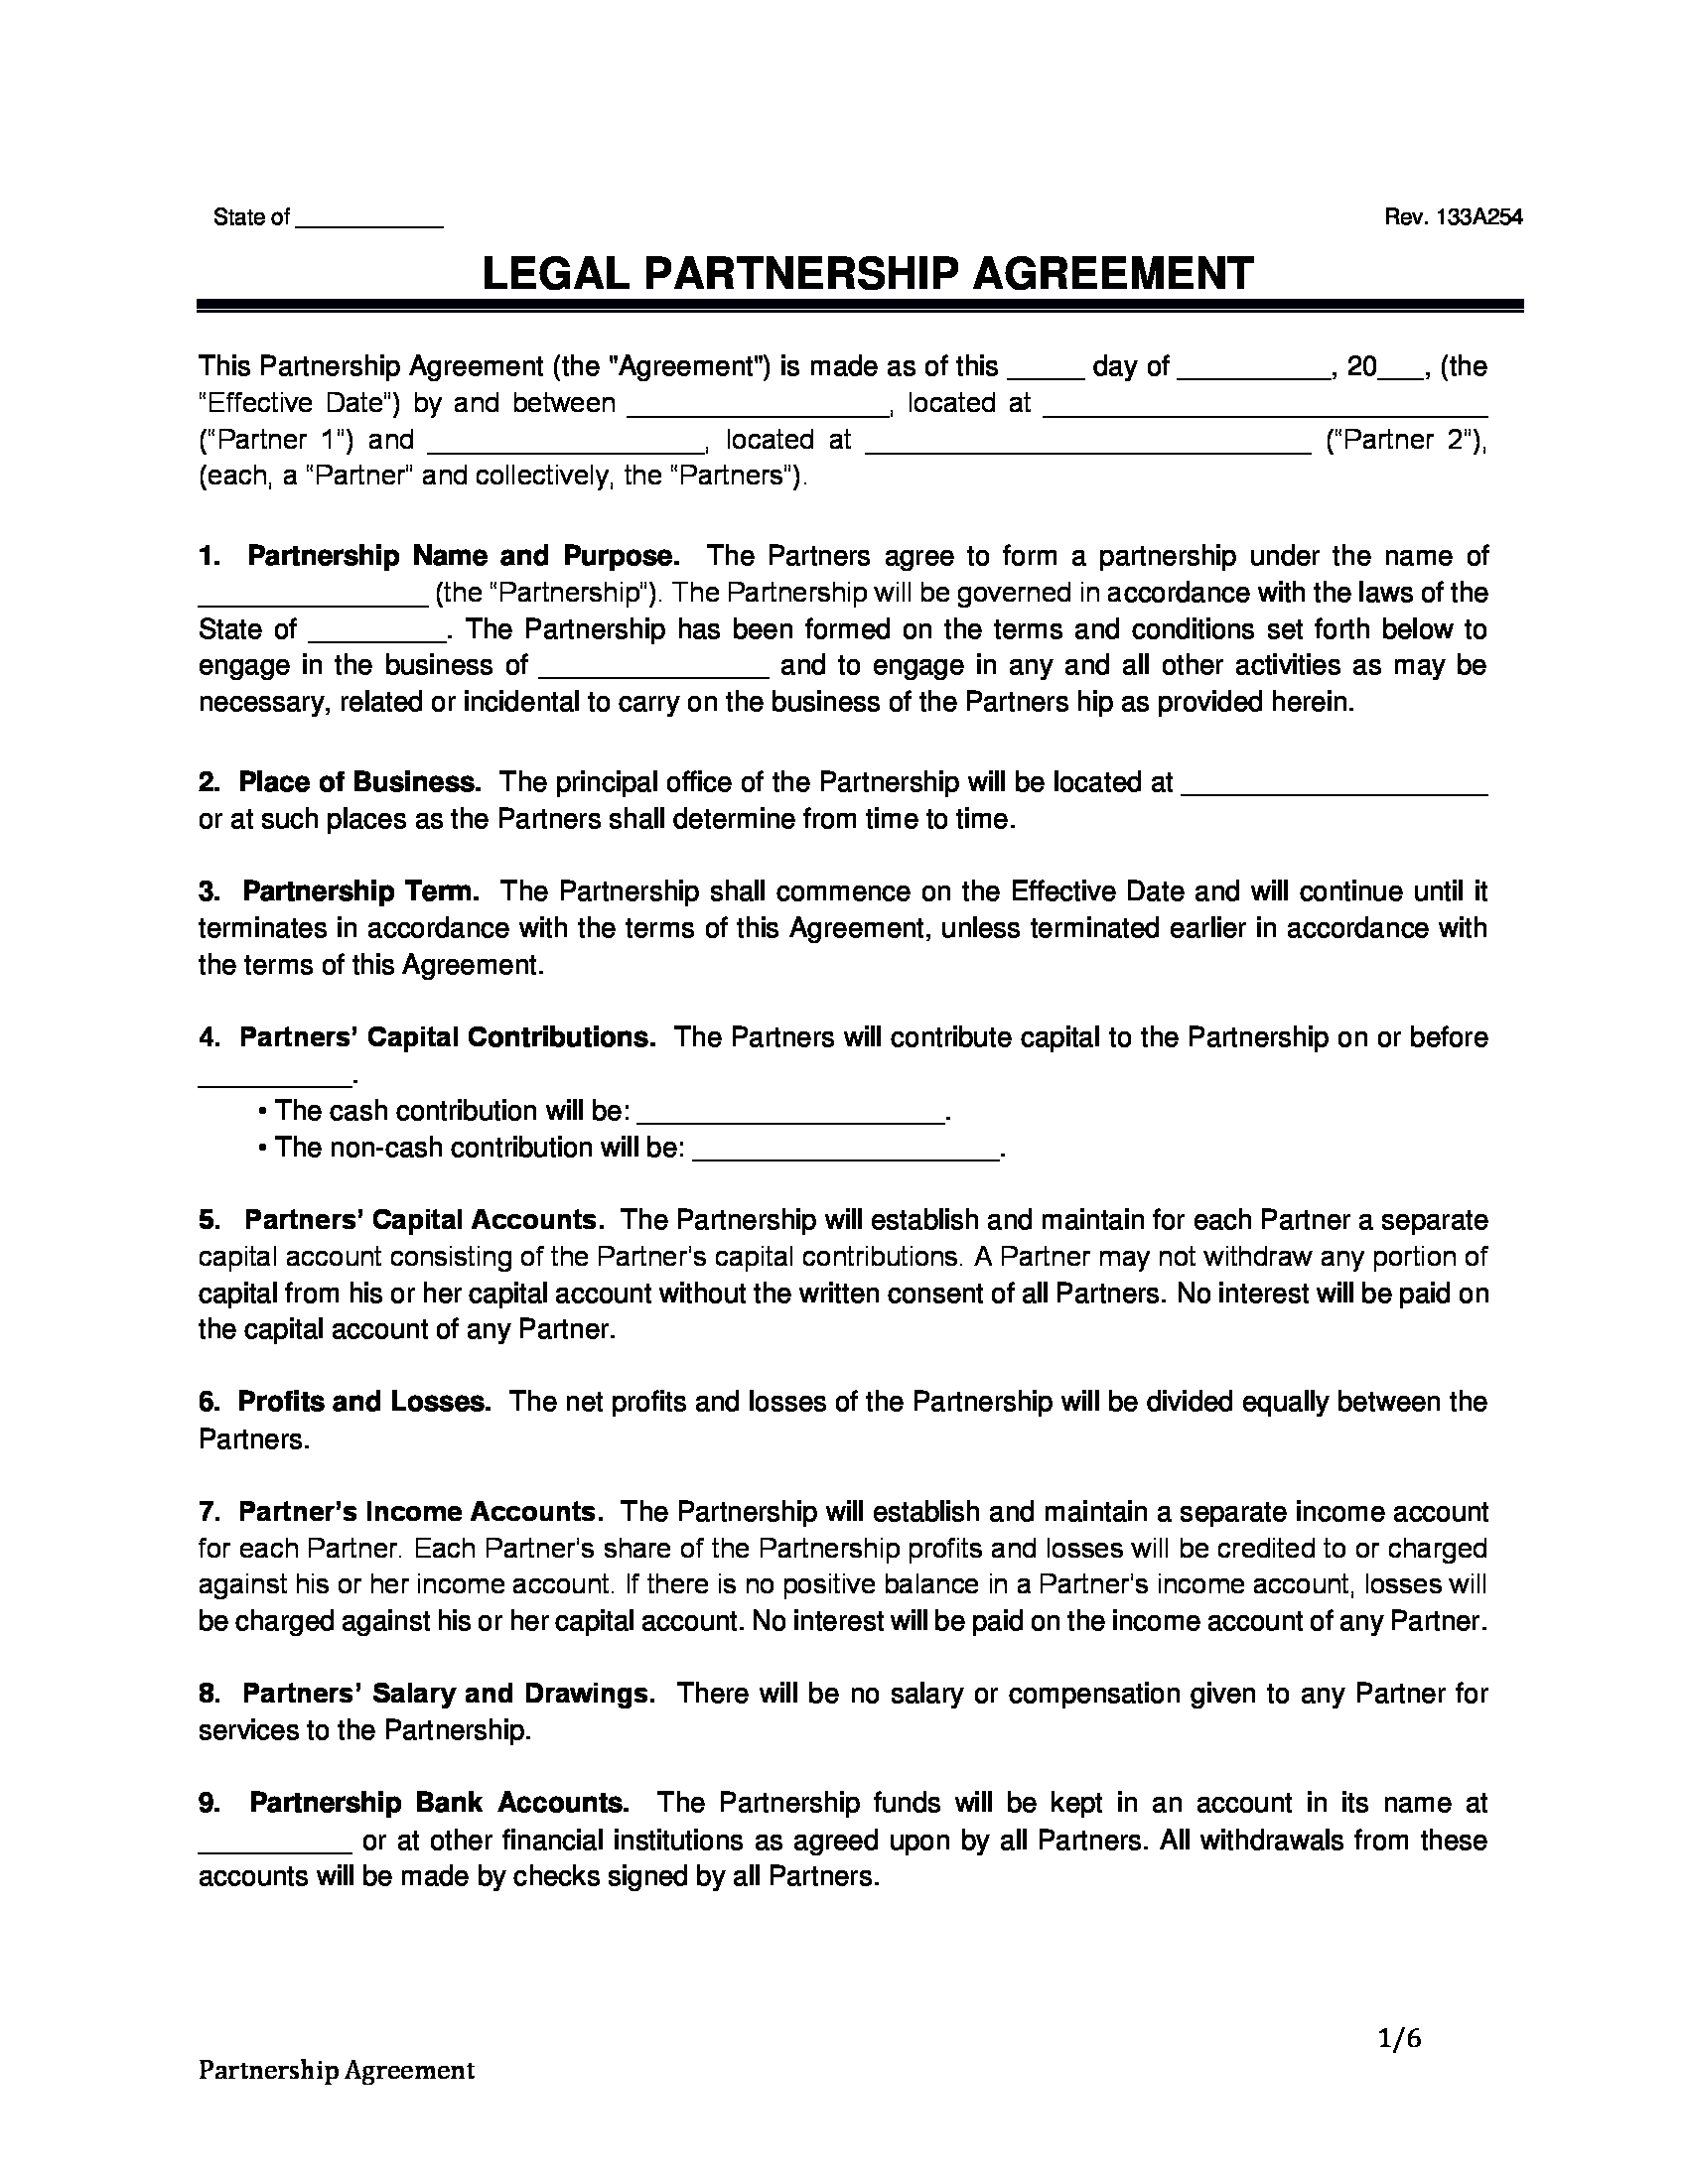 legal partnership agreement form 1